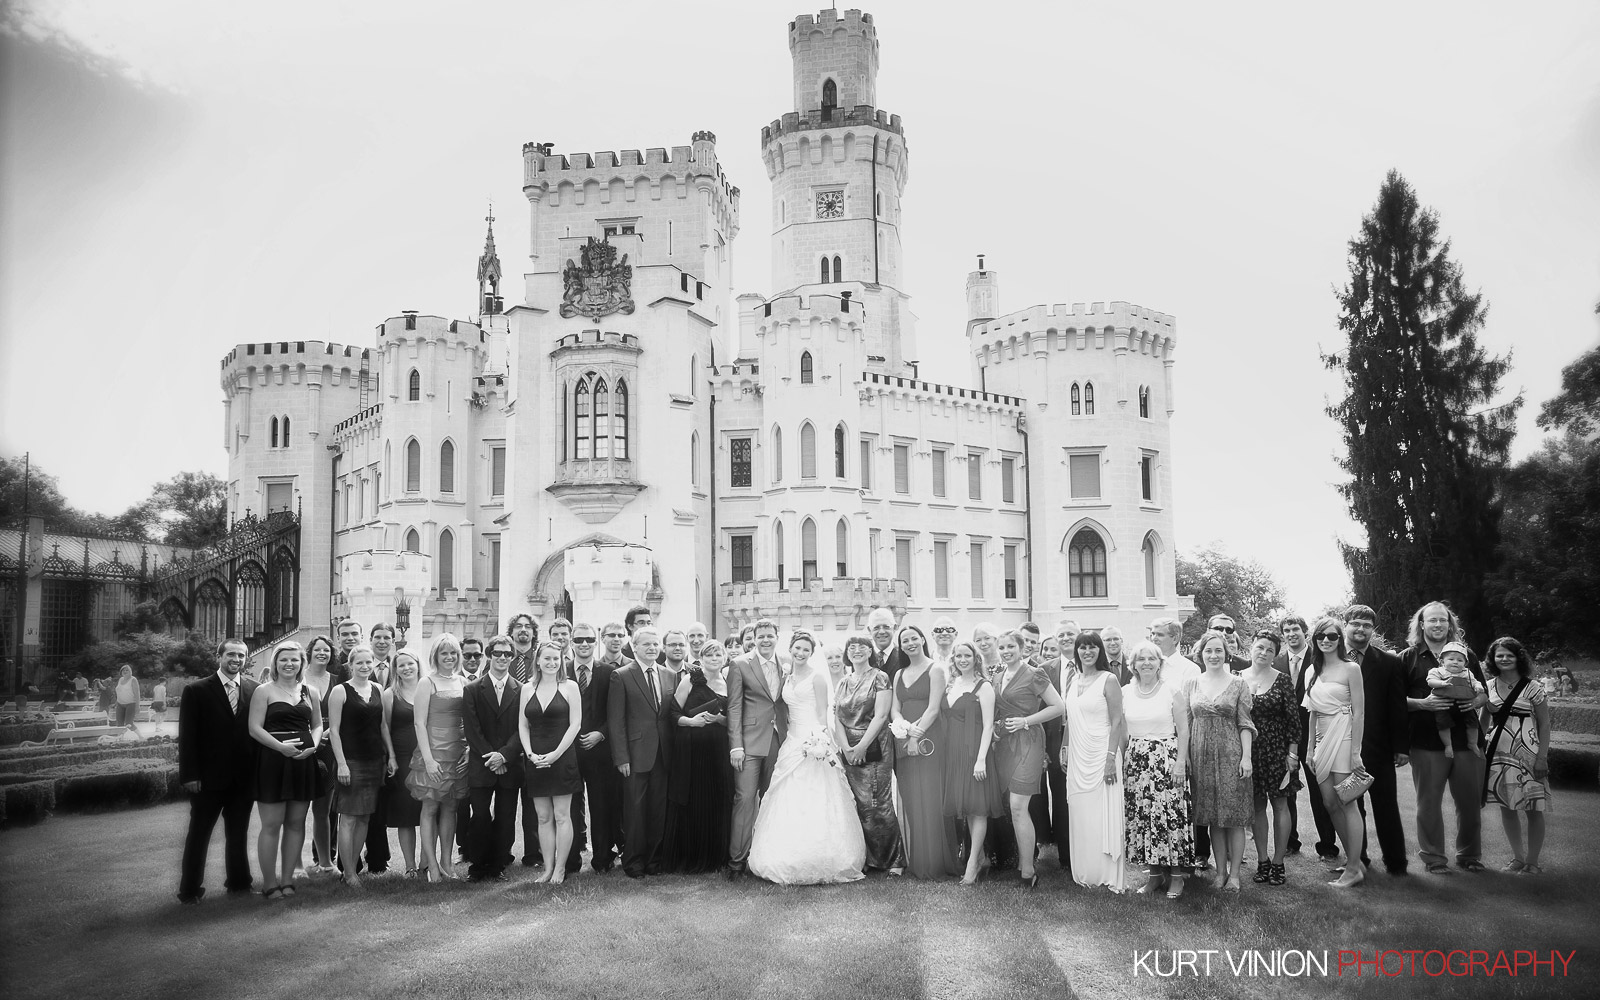 Hluboka nad Vltavou Castle wedding with Katya & Martina